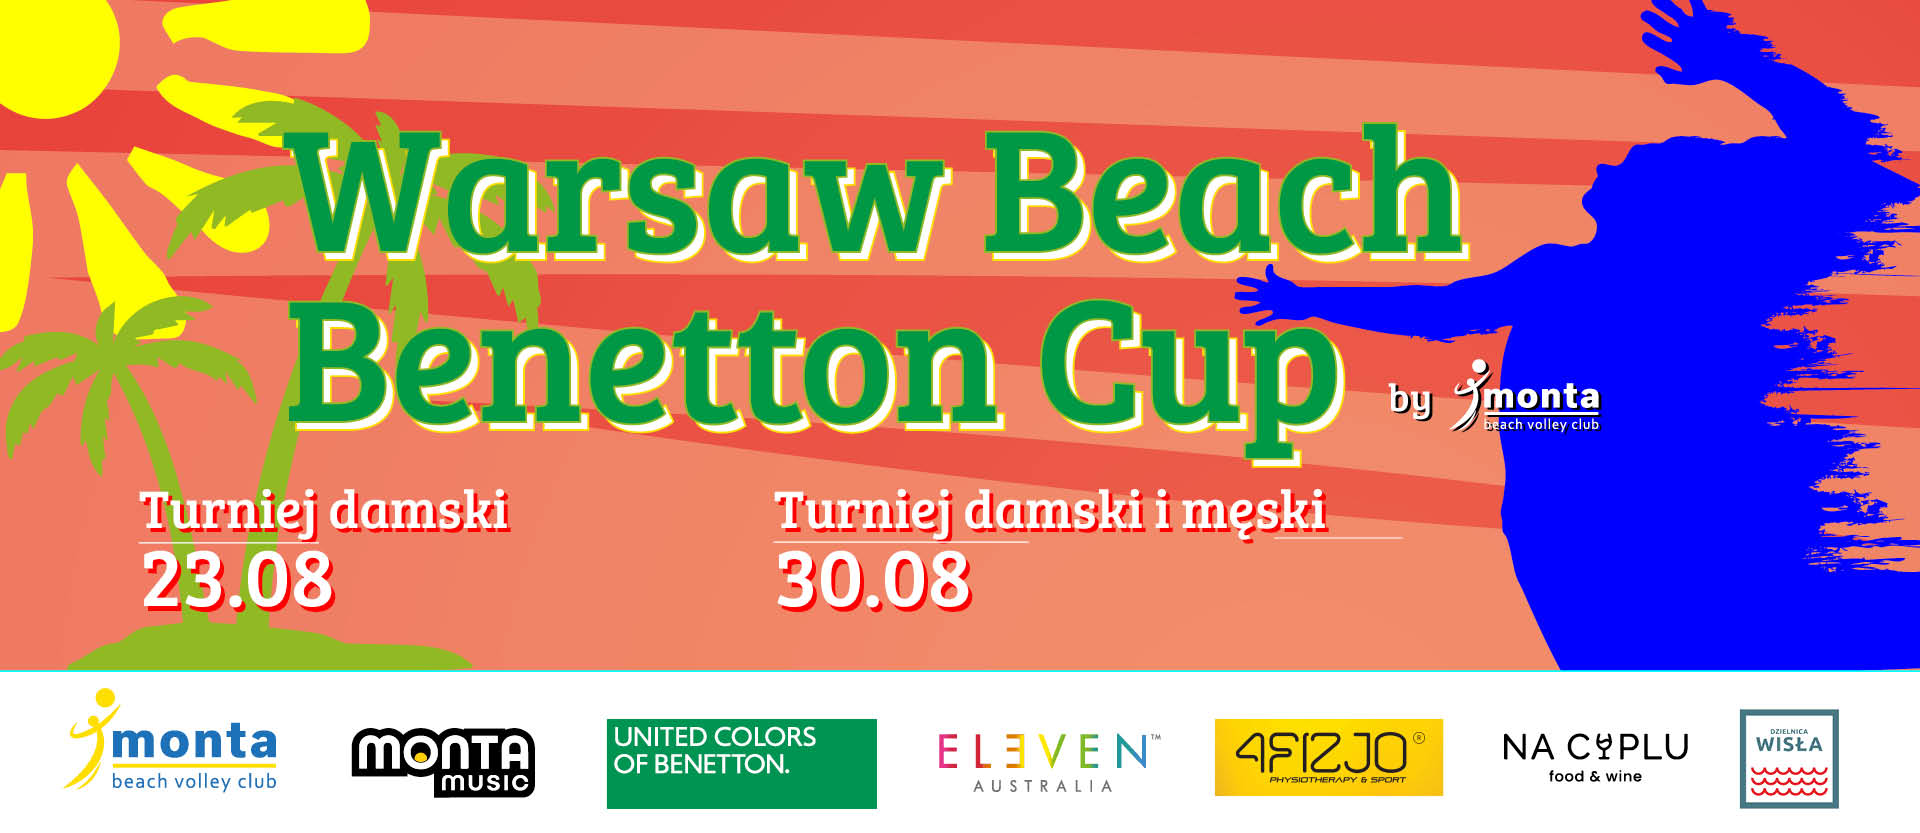 Warsaw Beach Benetton Cup 2020